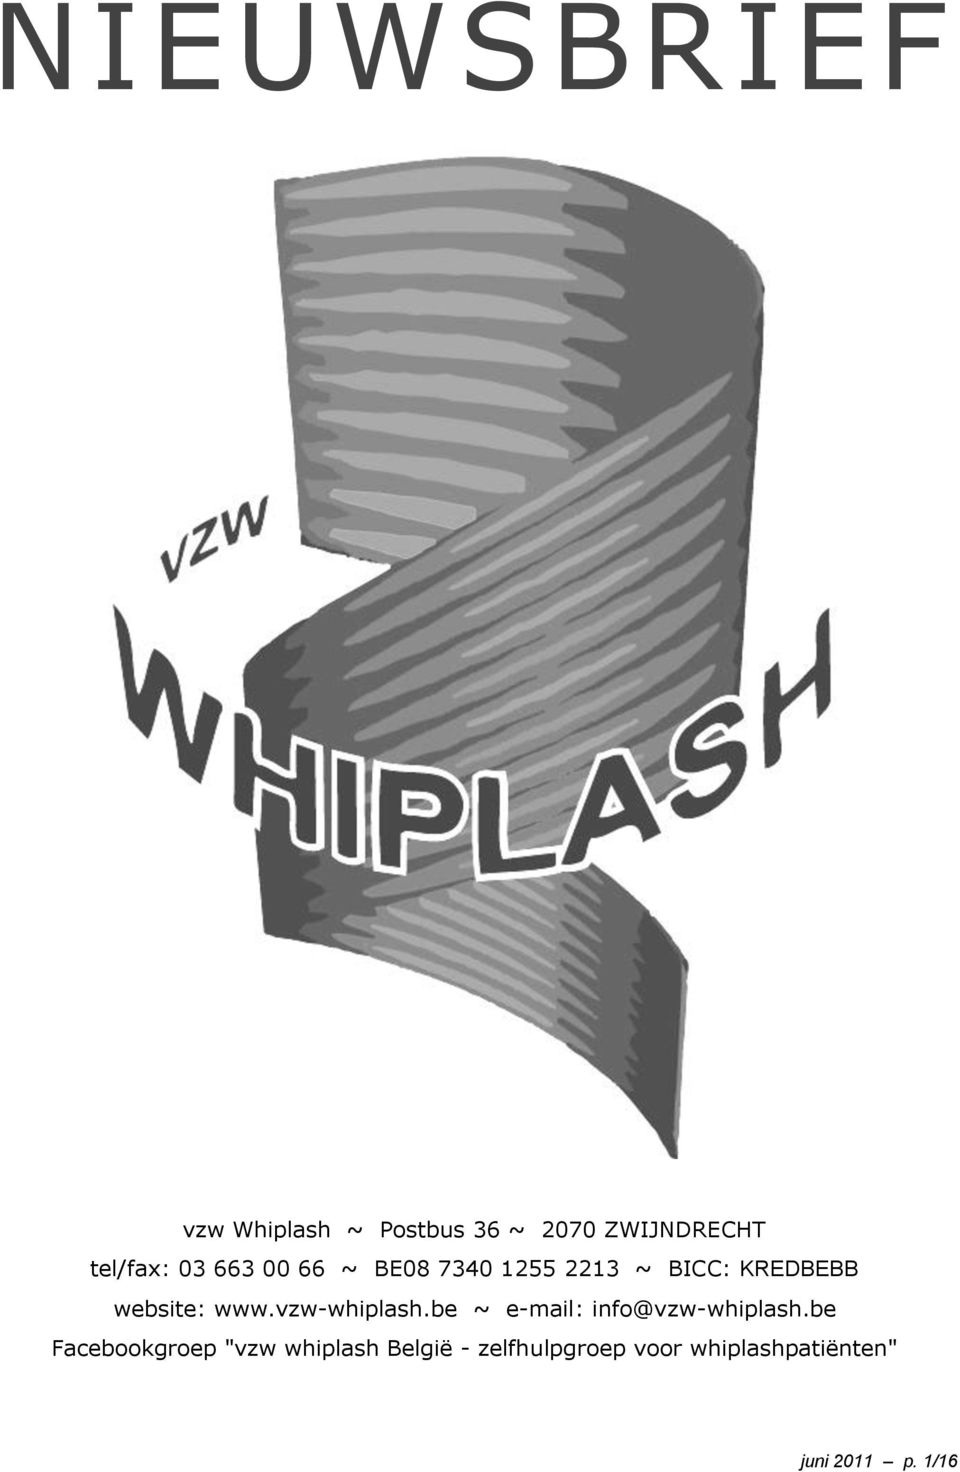 vzw-whiplash.be ~ e-mail: info@vzw-whiplash.